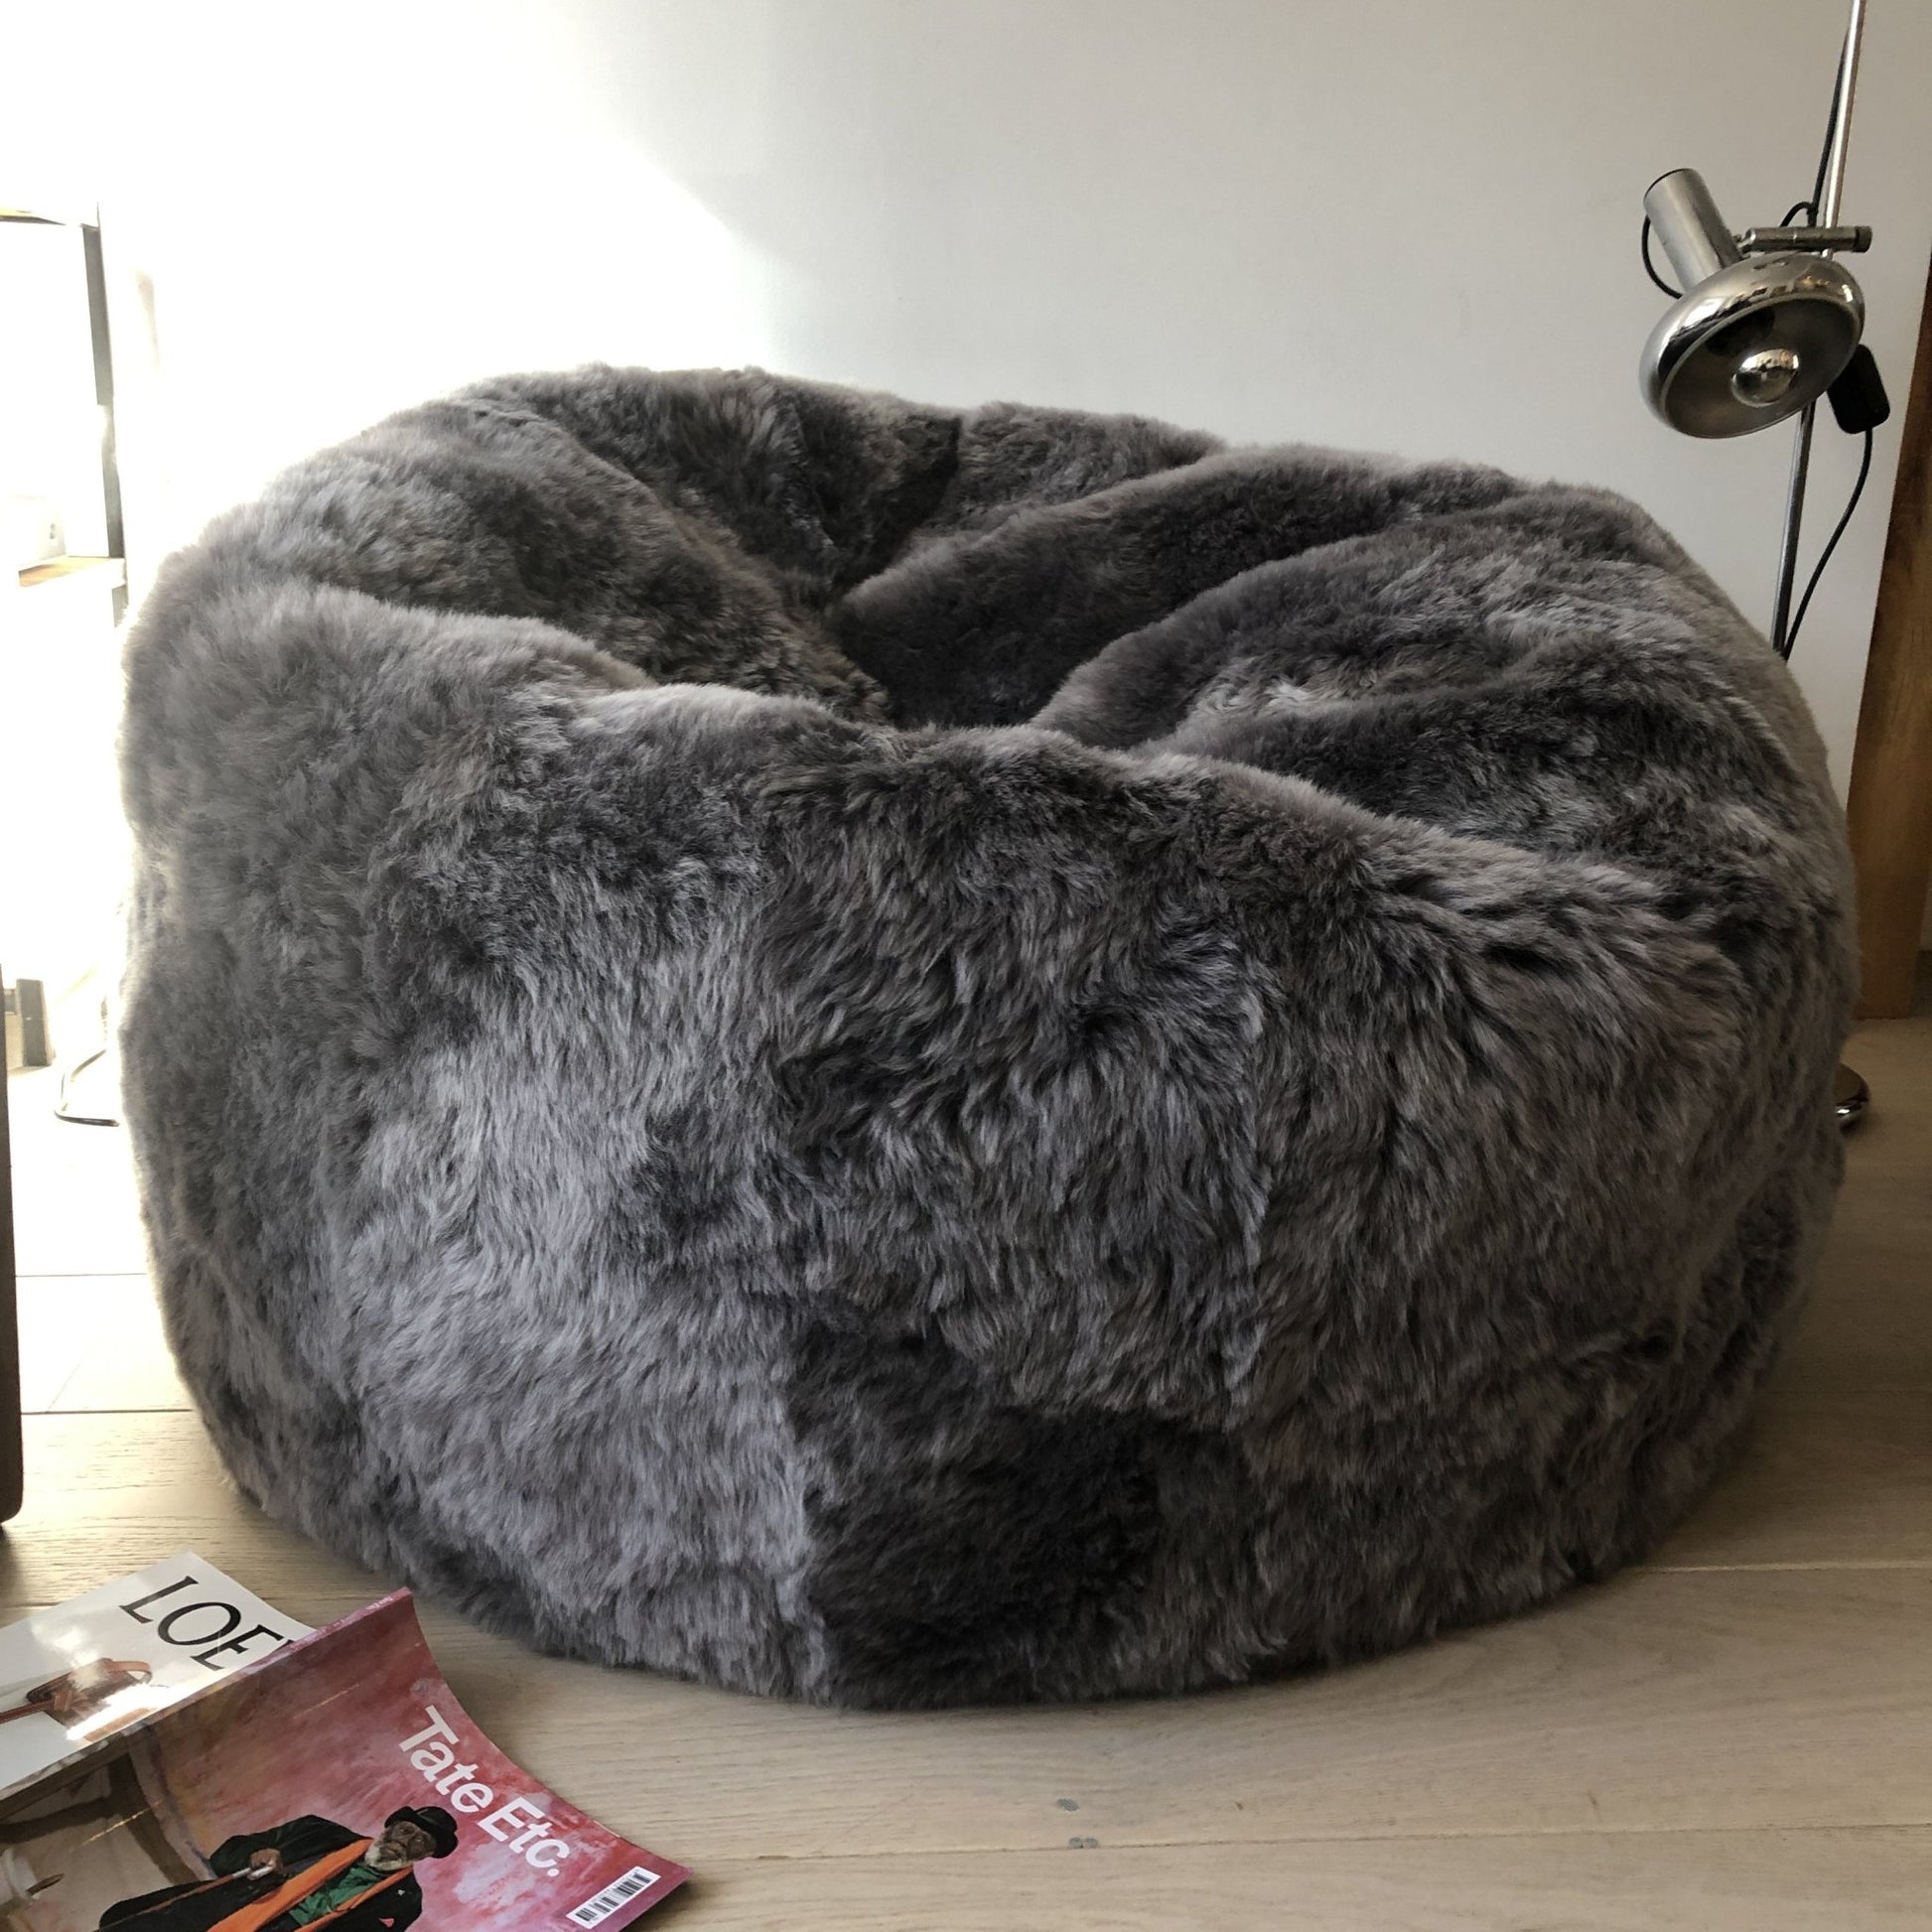 Sheepskin Beanbag Chair 100% Natural Icelandic Shorn Sheepskin Cool Grey Bean Bag - The Pillbox - Wildash London